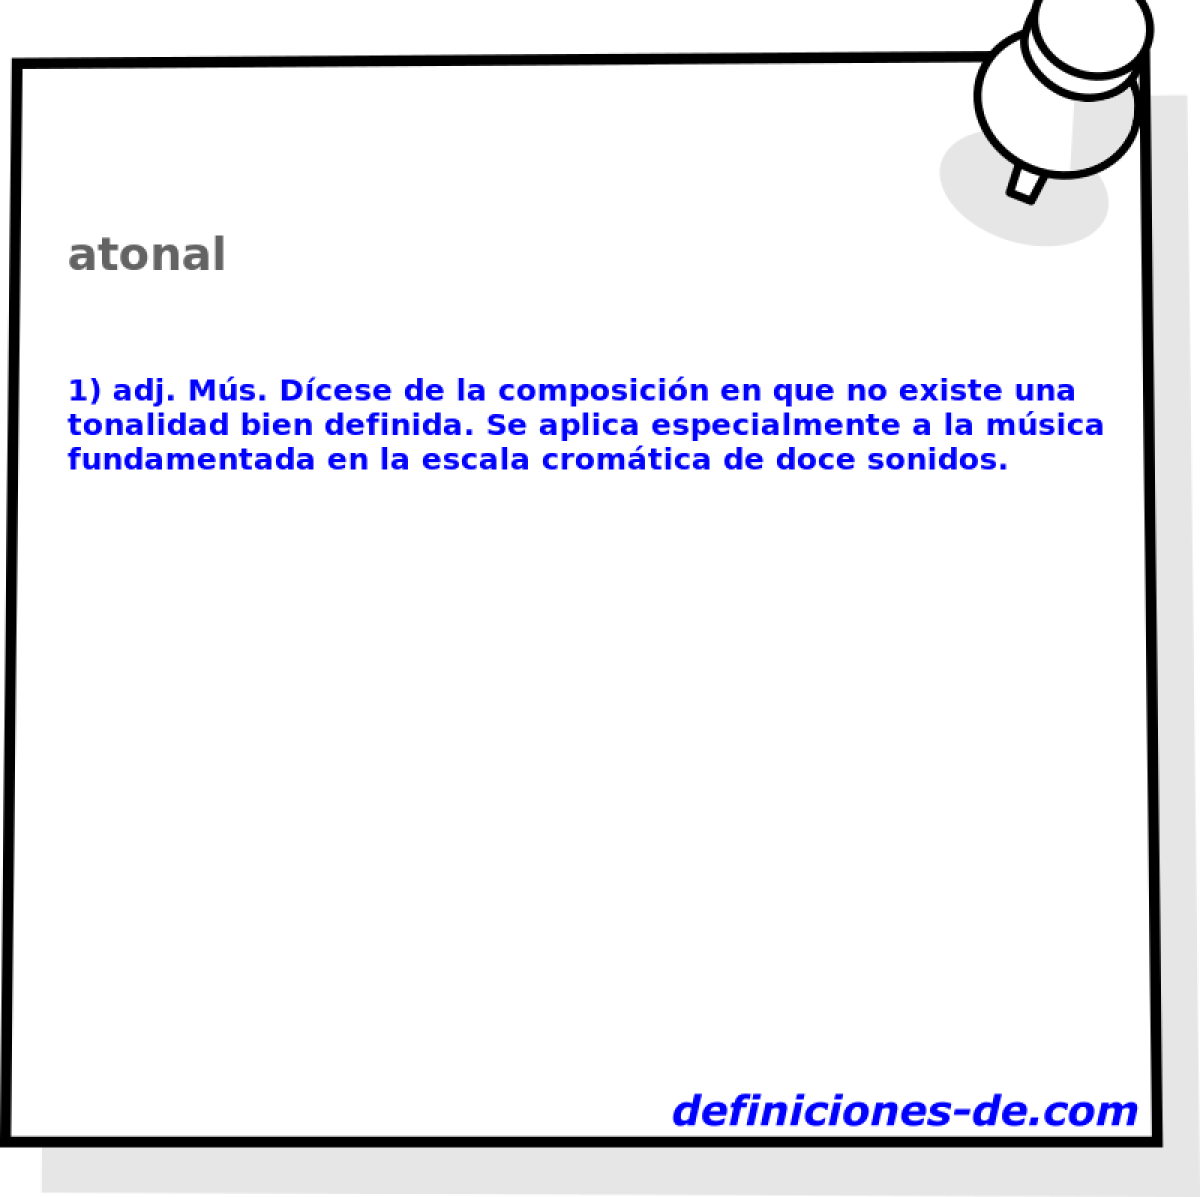 atonal 